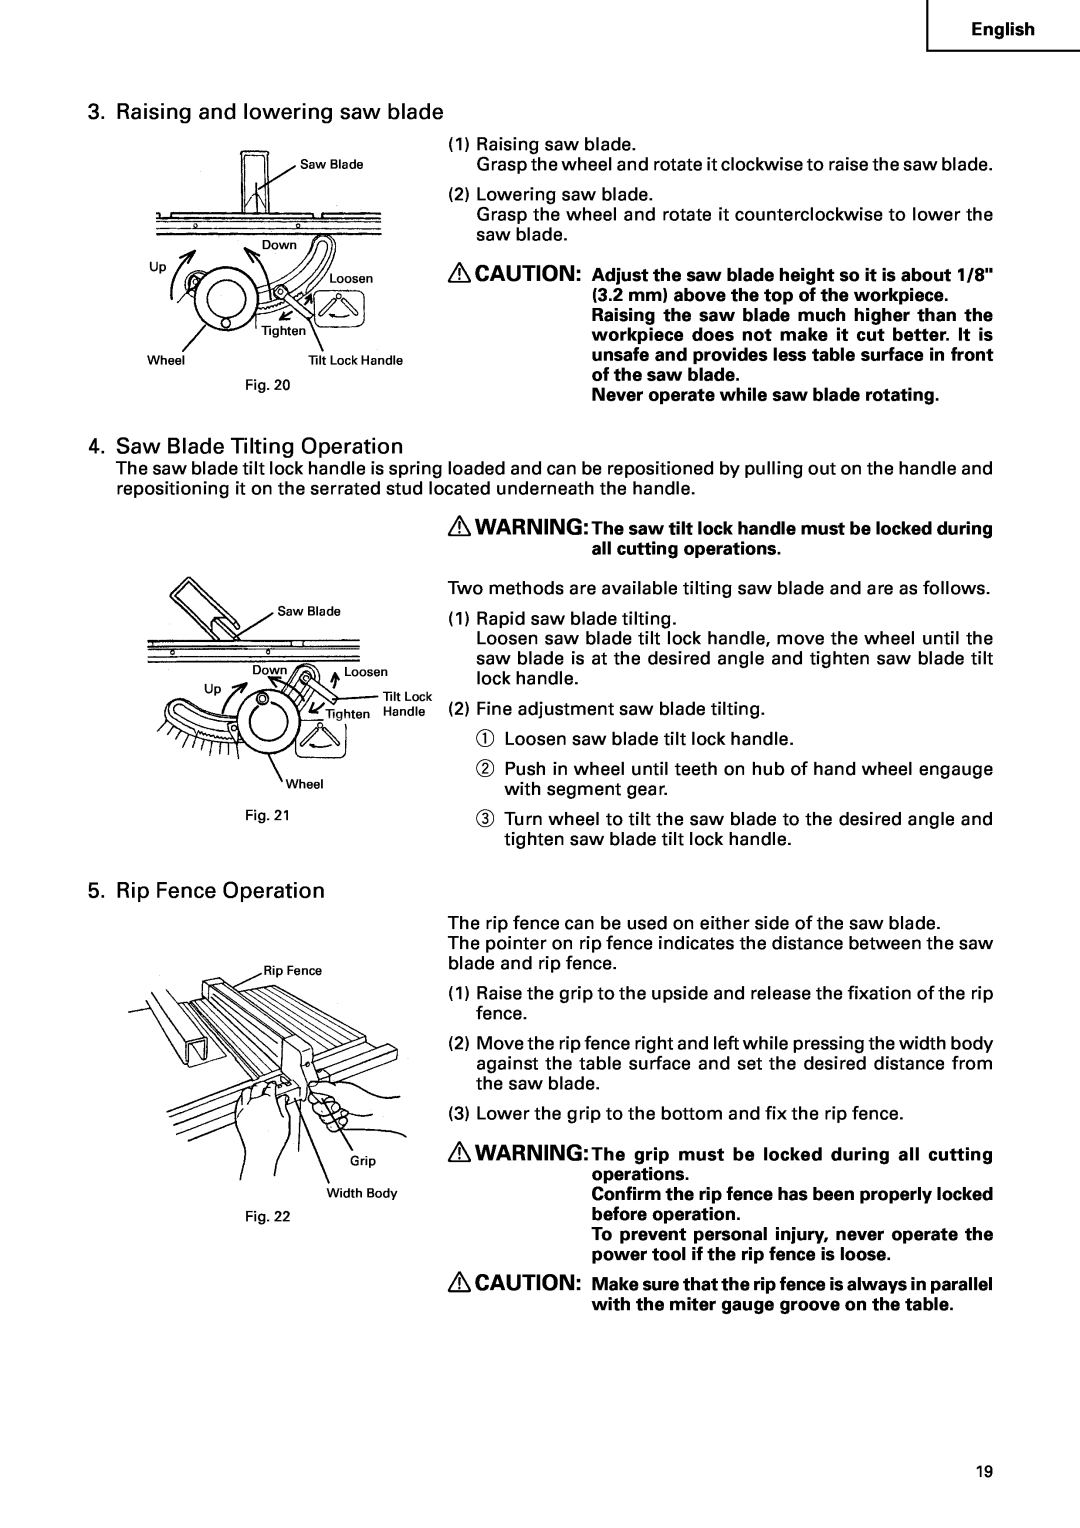 Hitachi C10RA2 instruction manual Raising and lowering saw blade, Saw Blade Tilting Operation, Rip Fence Operation 